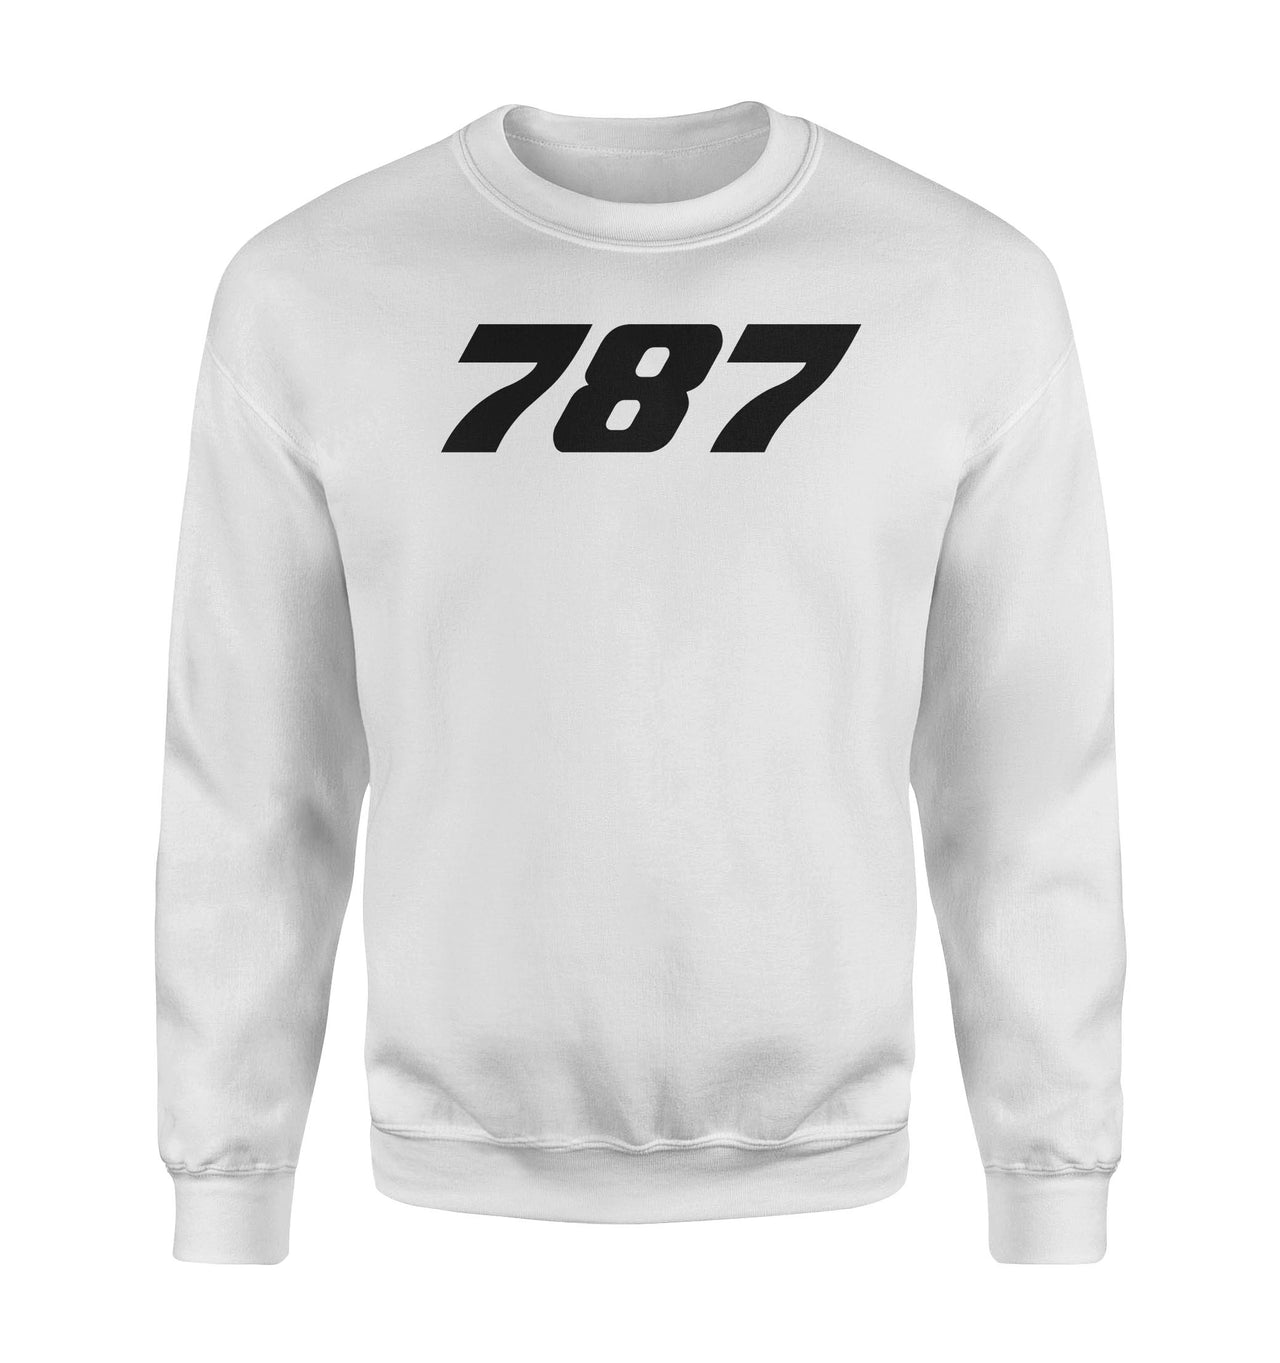 787 Flat Text Designed Sweatshirts